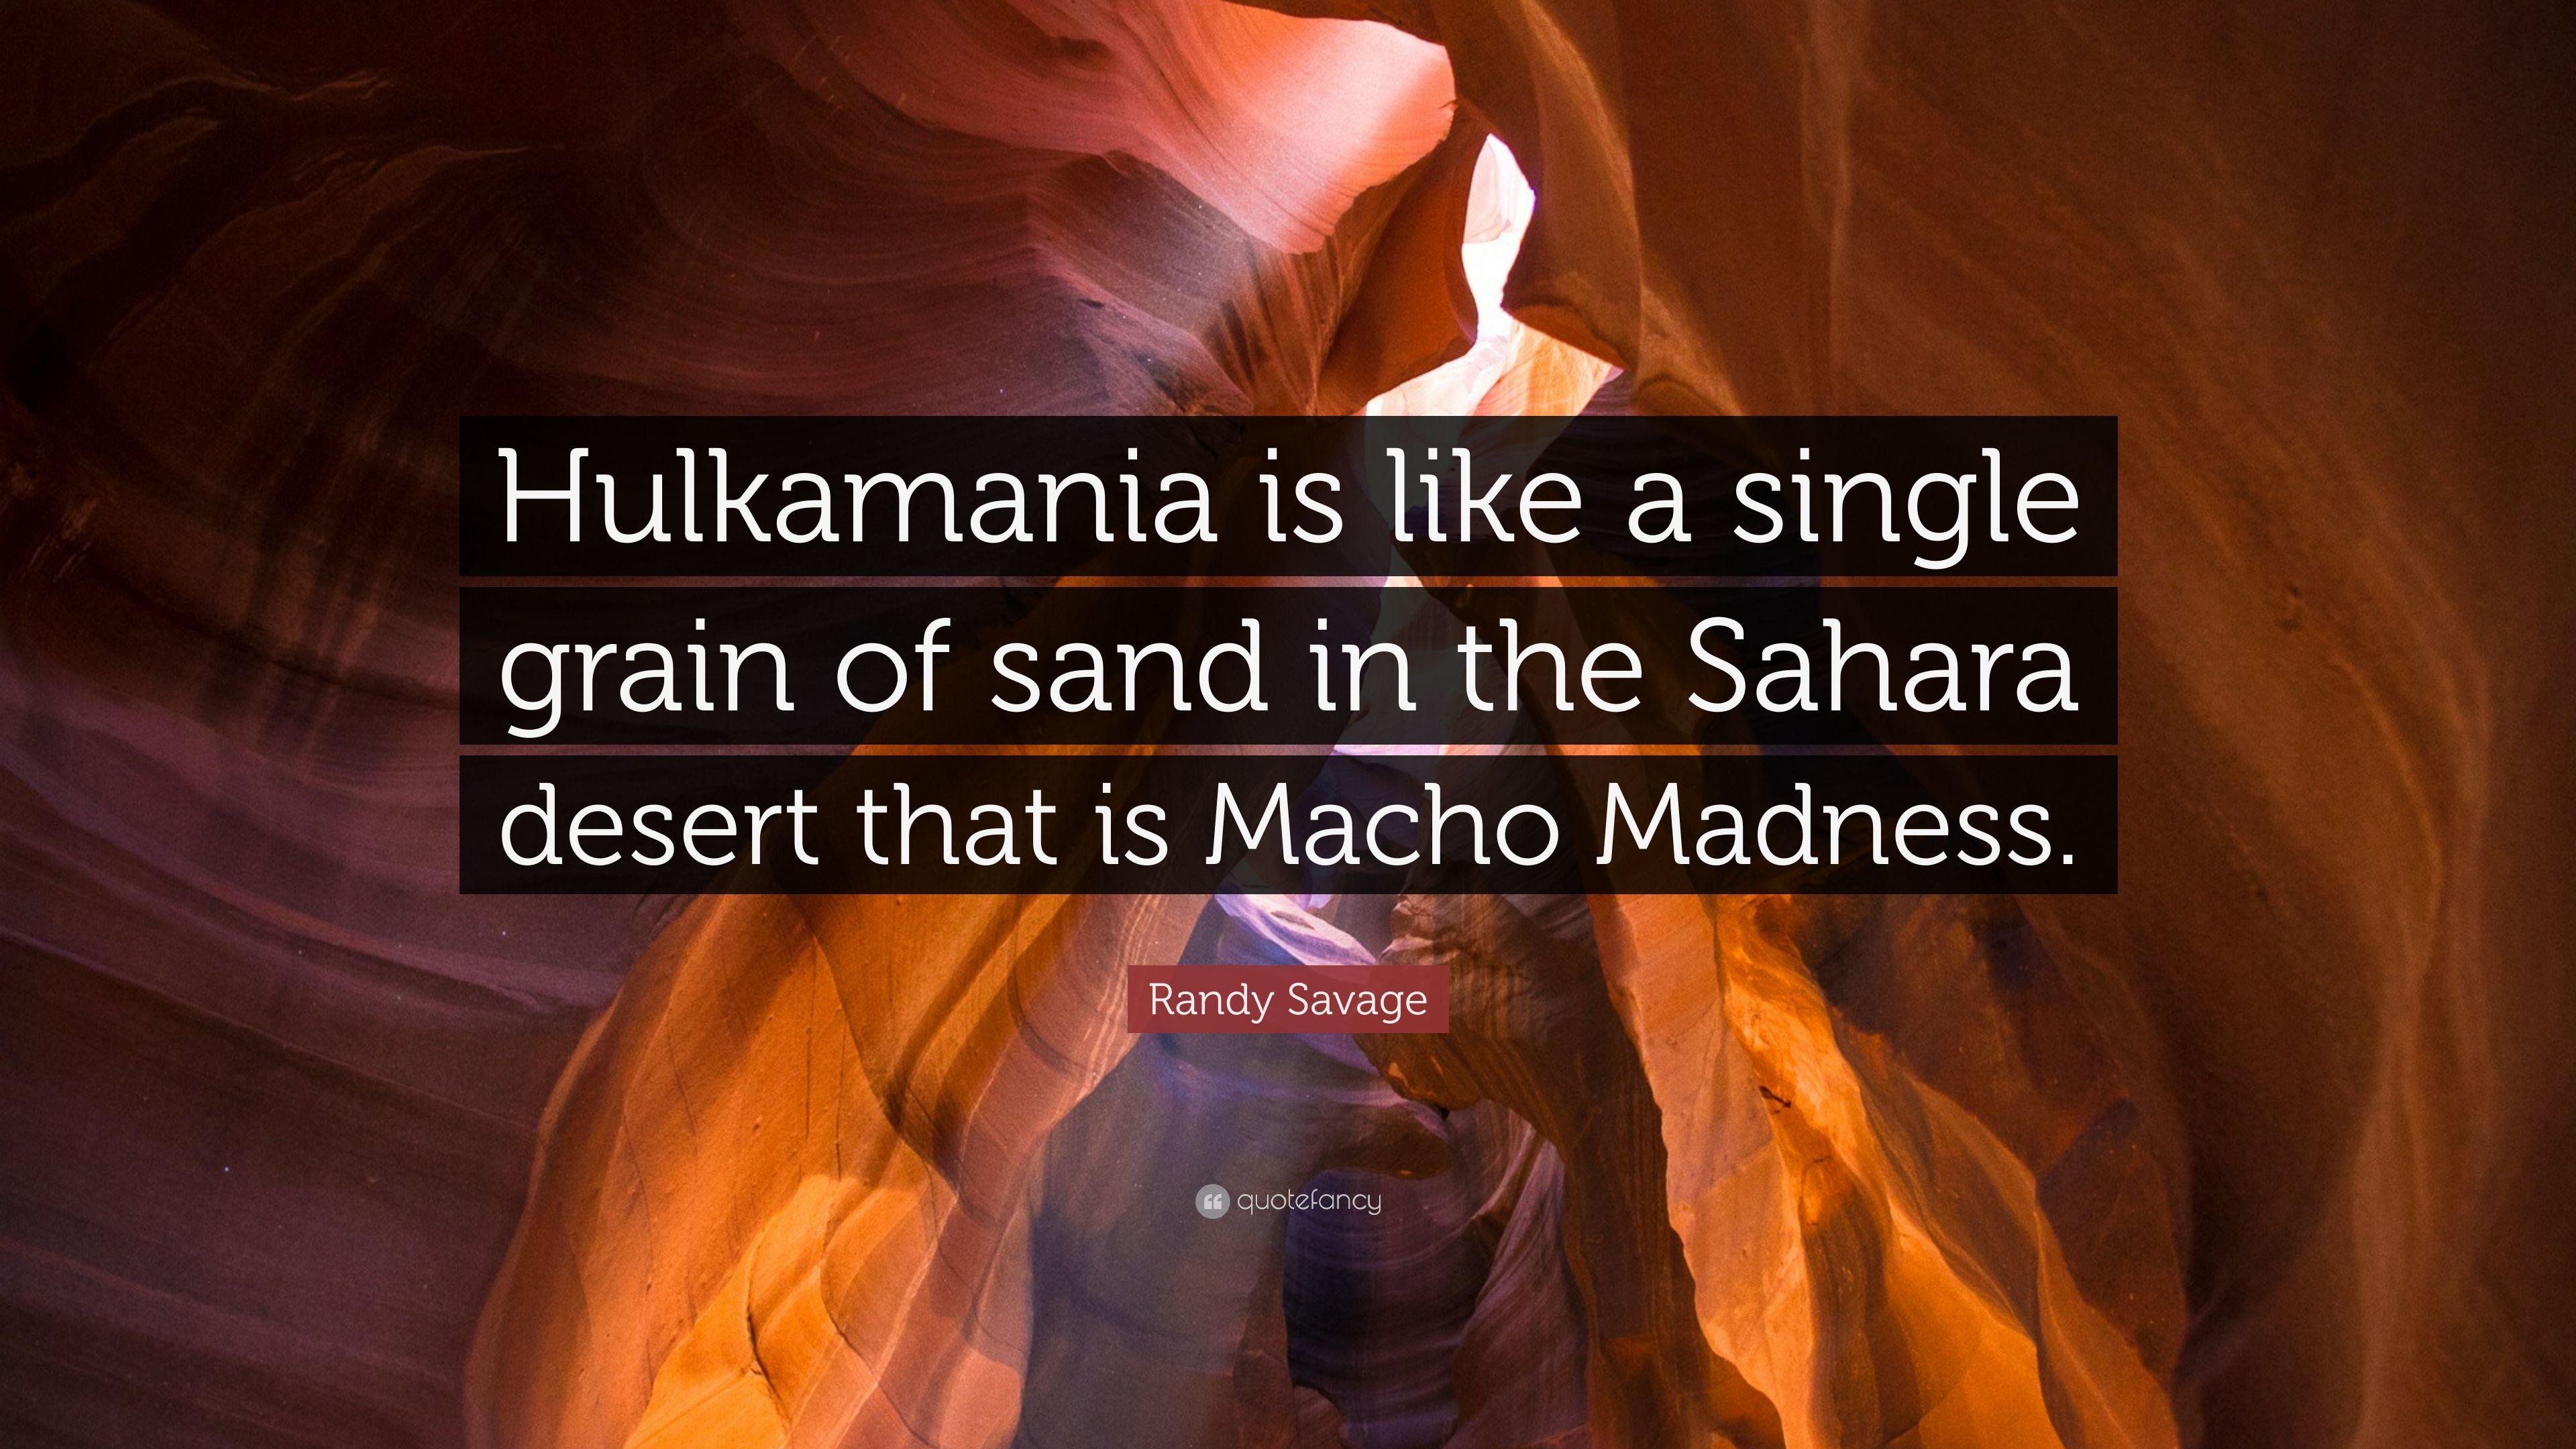 Randy Savage Madness Logo - Randy Savage Quote: “Hulkamania is like a single grain of sand